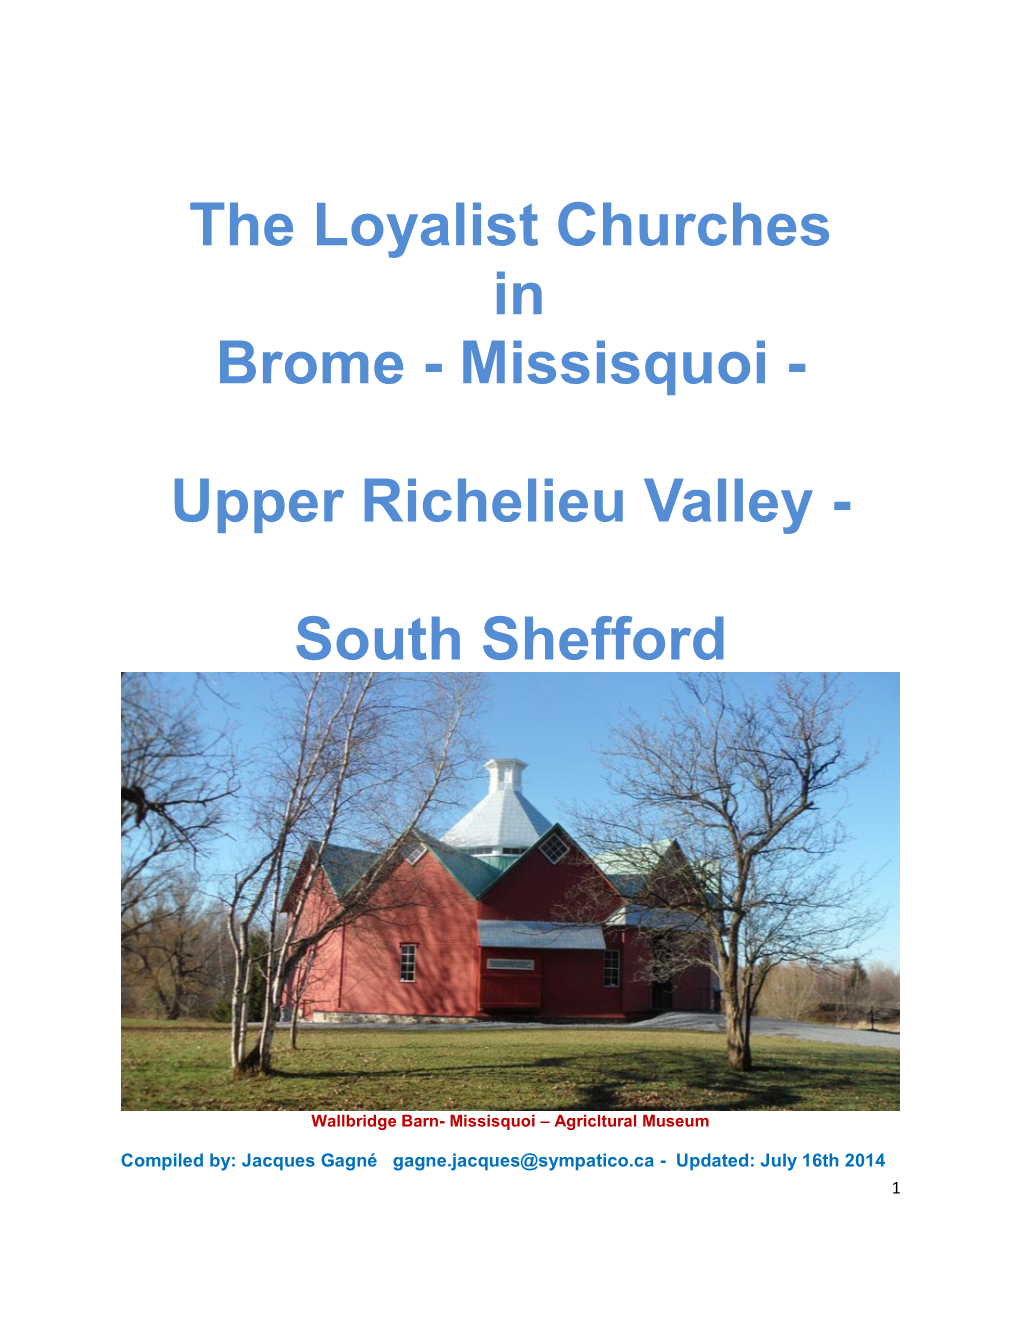 The Loyalist Churches in Brome - Missisquoi